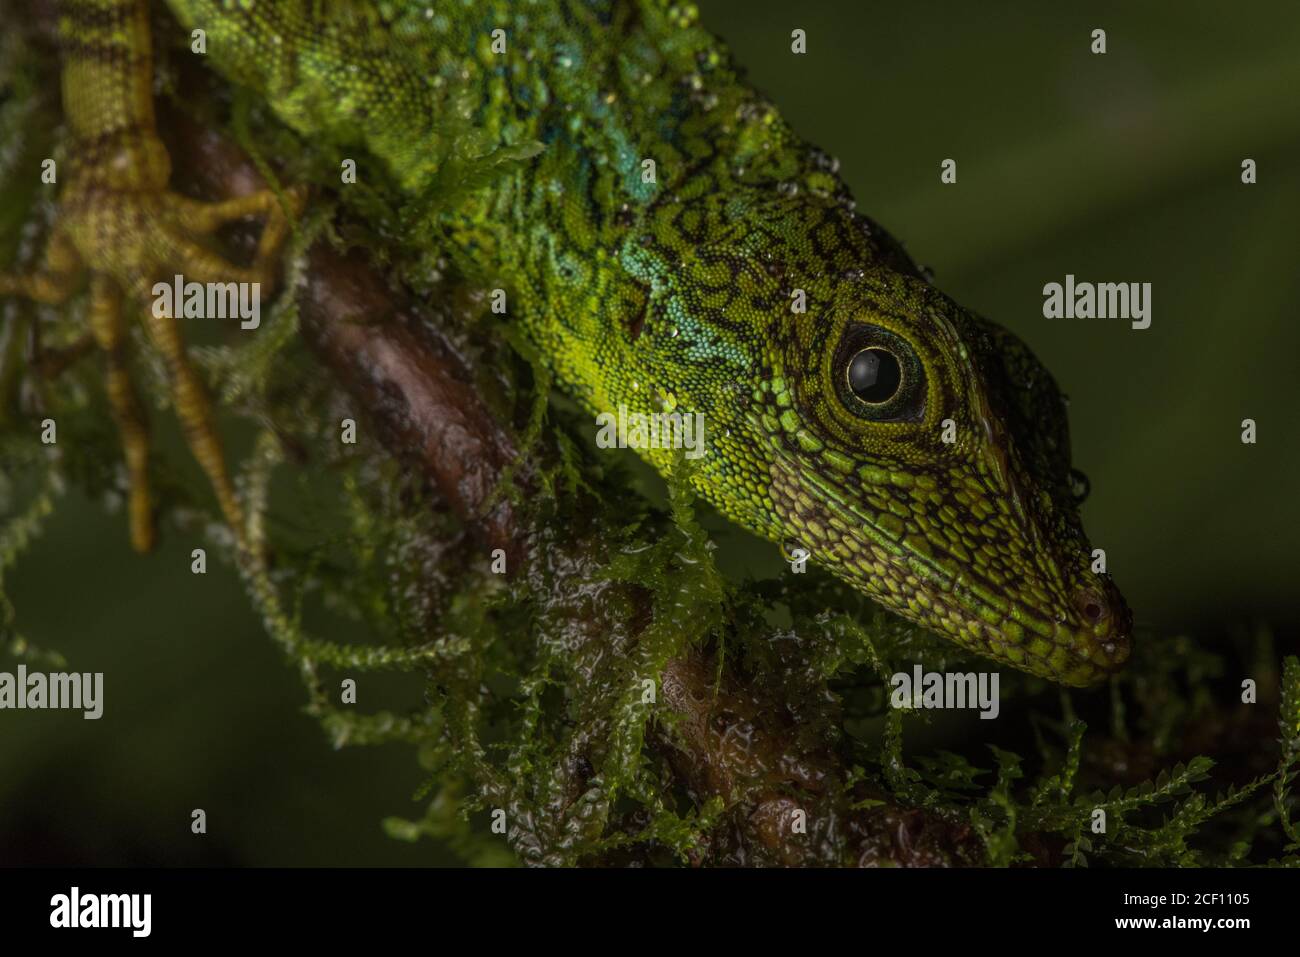 The face of a equatorial anole (Anolis aequatorialis) a species of lizard found in the Ecuadorian rainforest. Stock Photo